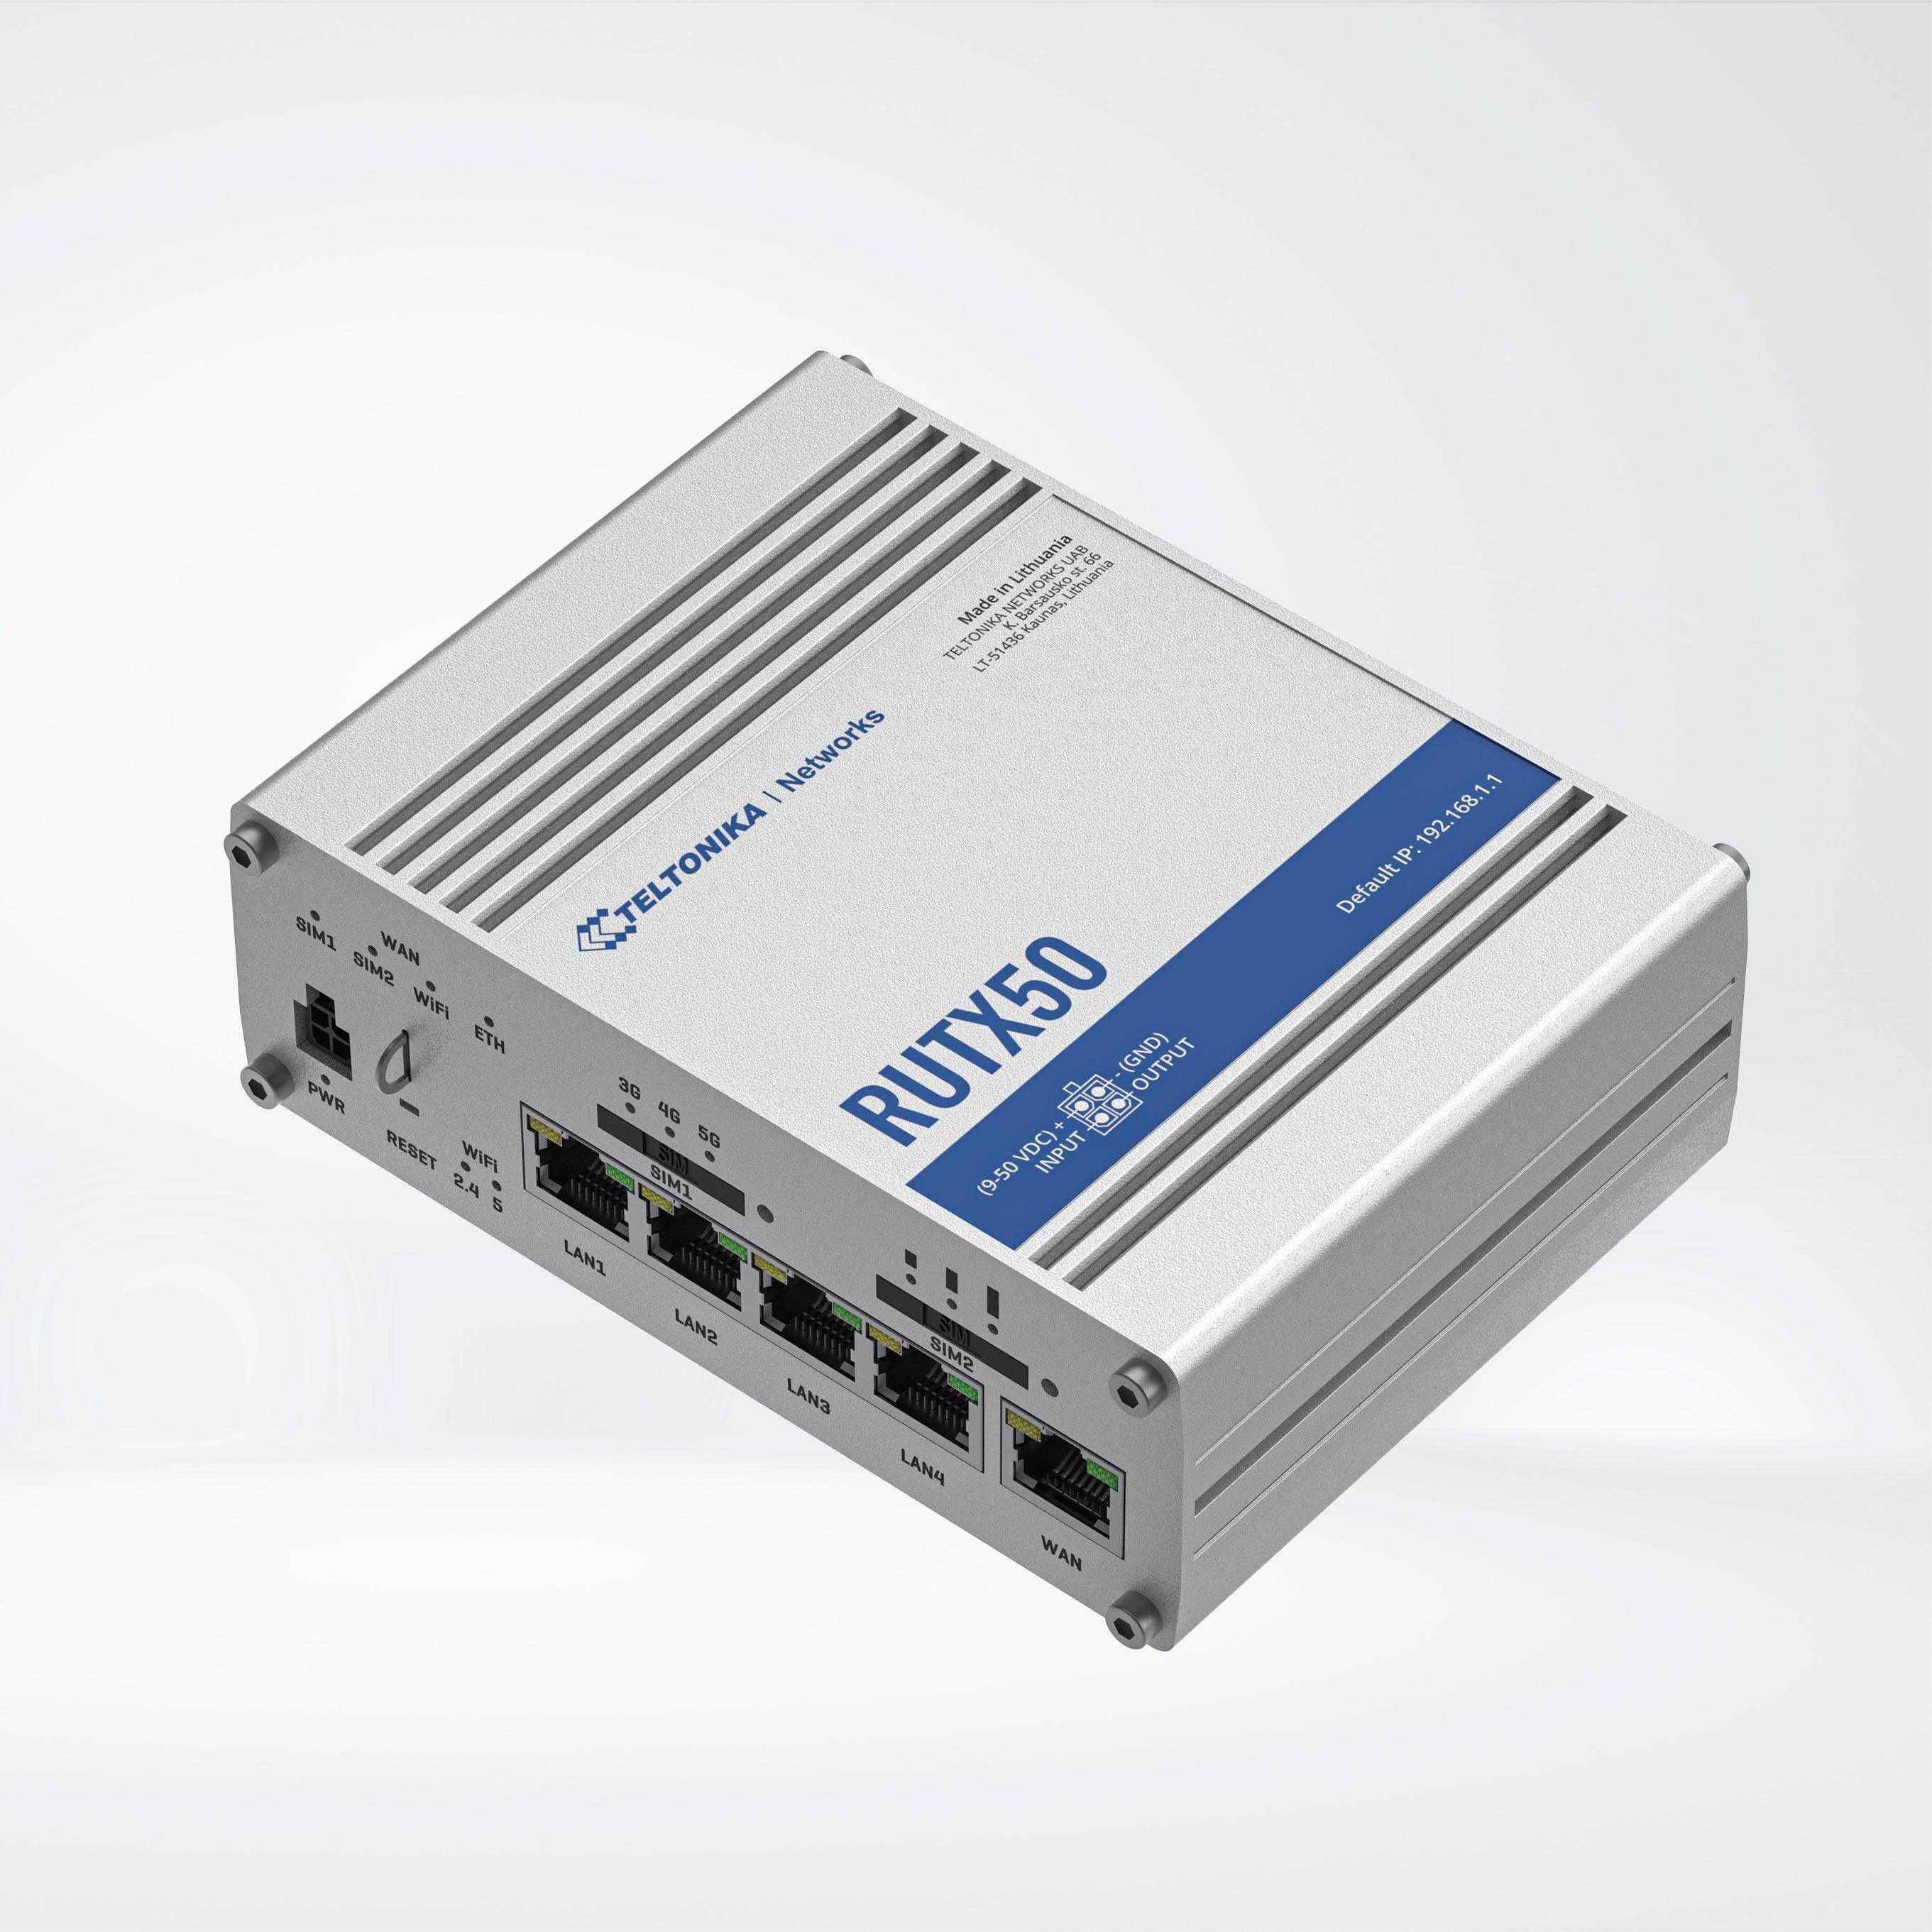 RUTX50 Industrial 5G Router - Riverplus